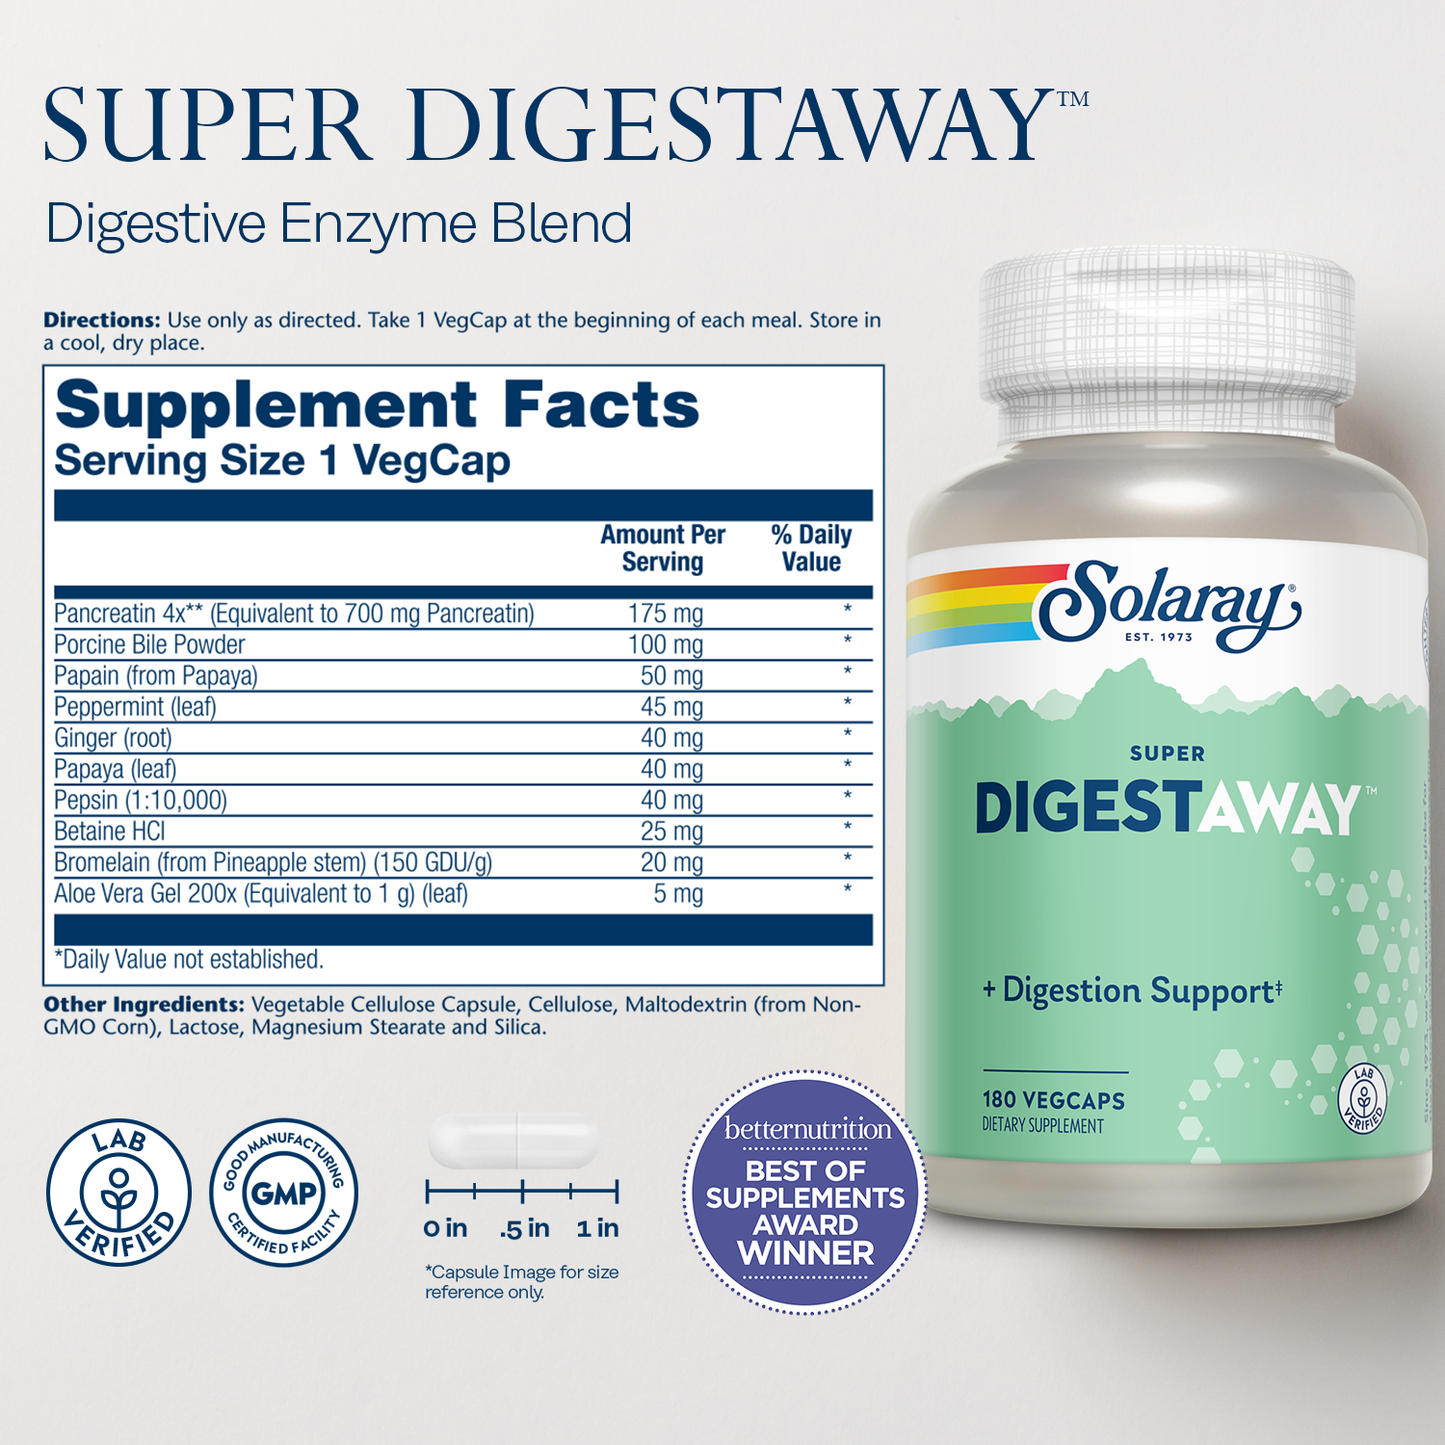 Super Digestaway